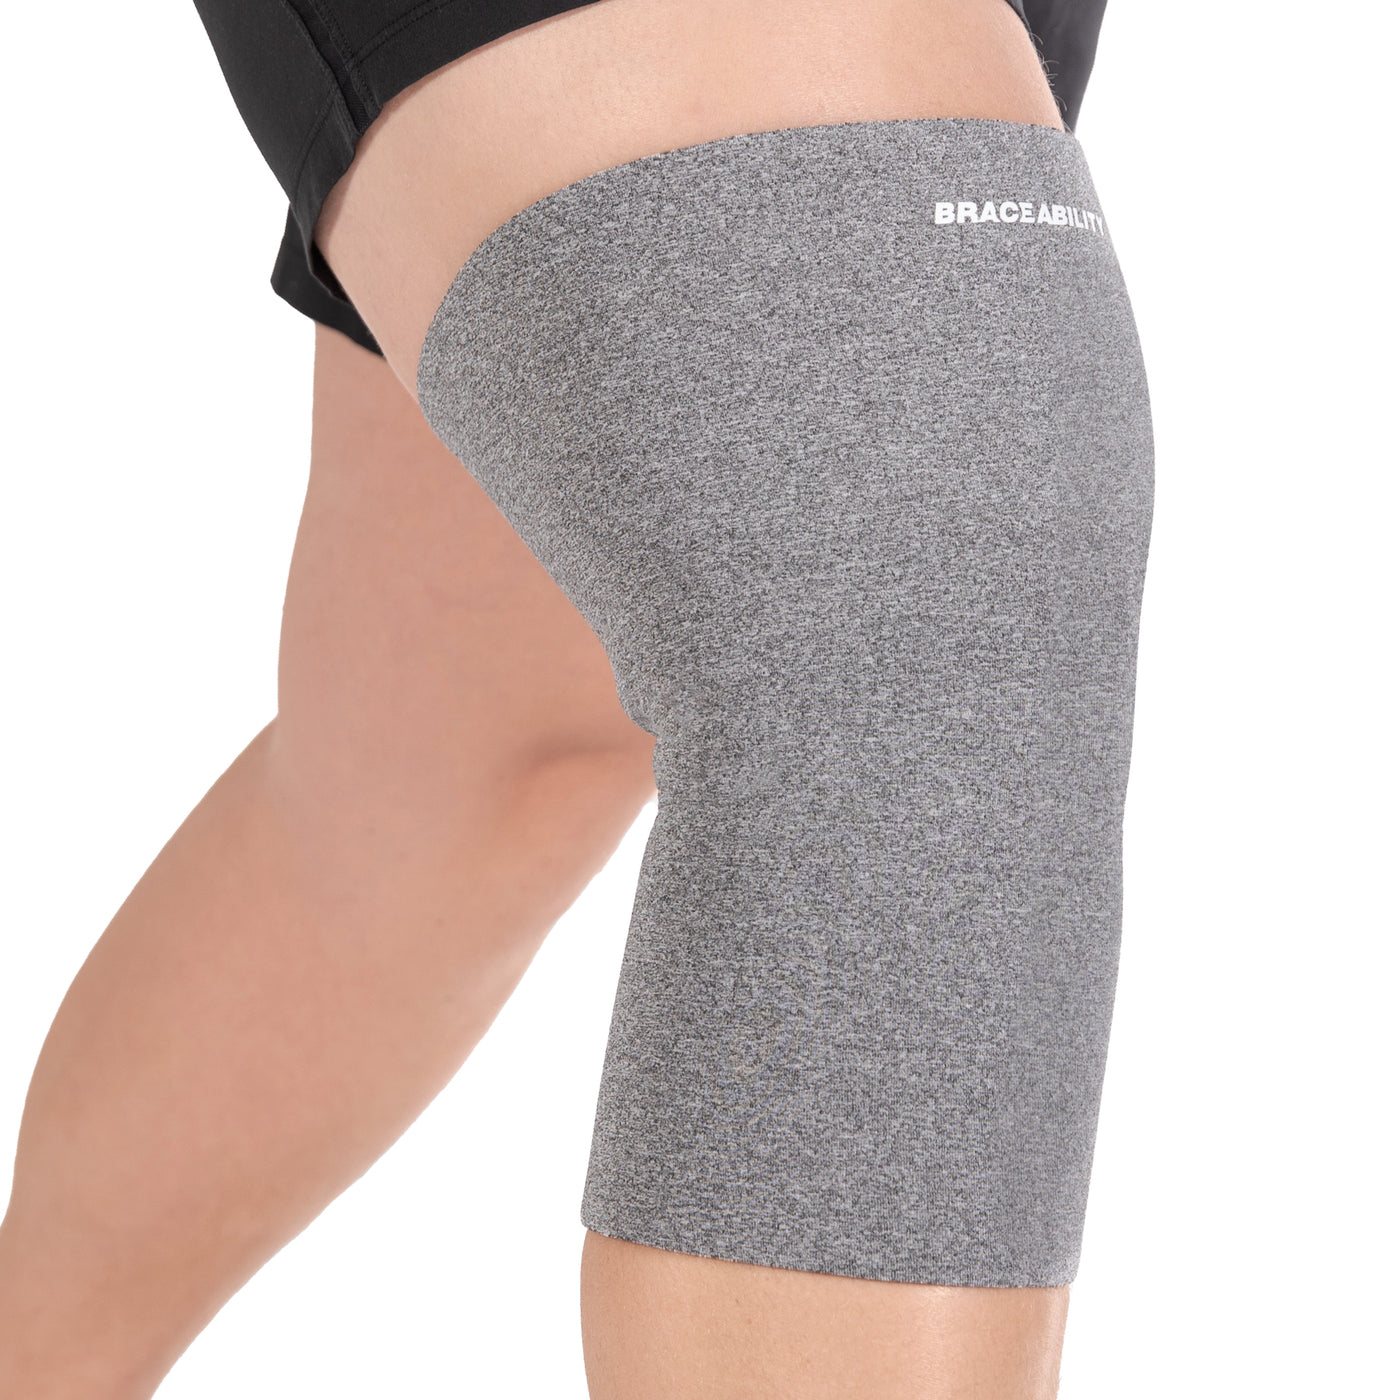 Plus Size Neoprene Knee Compression Sleeve